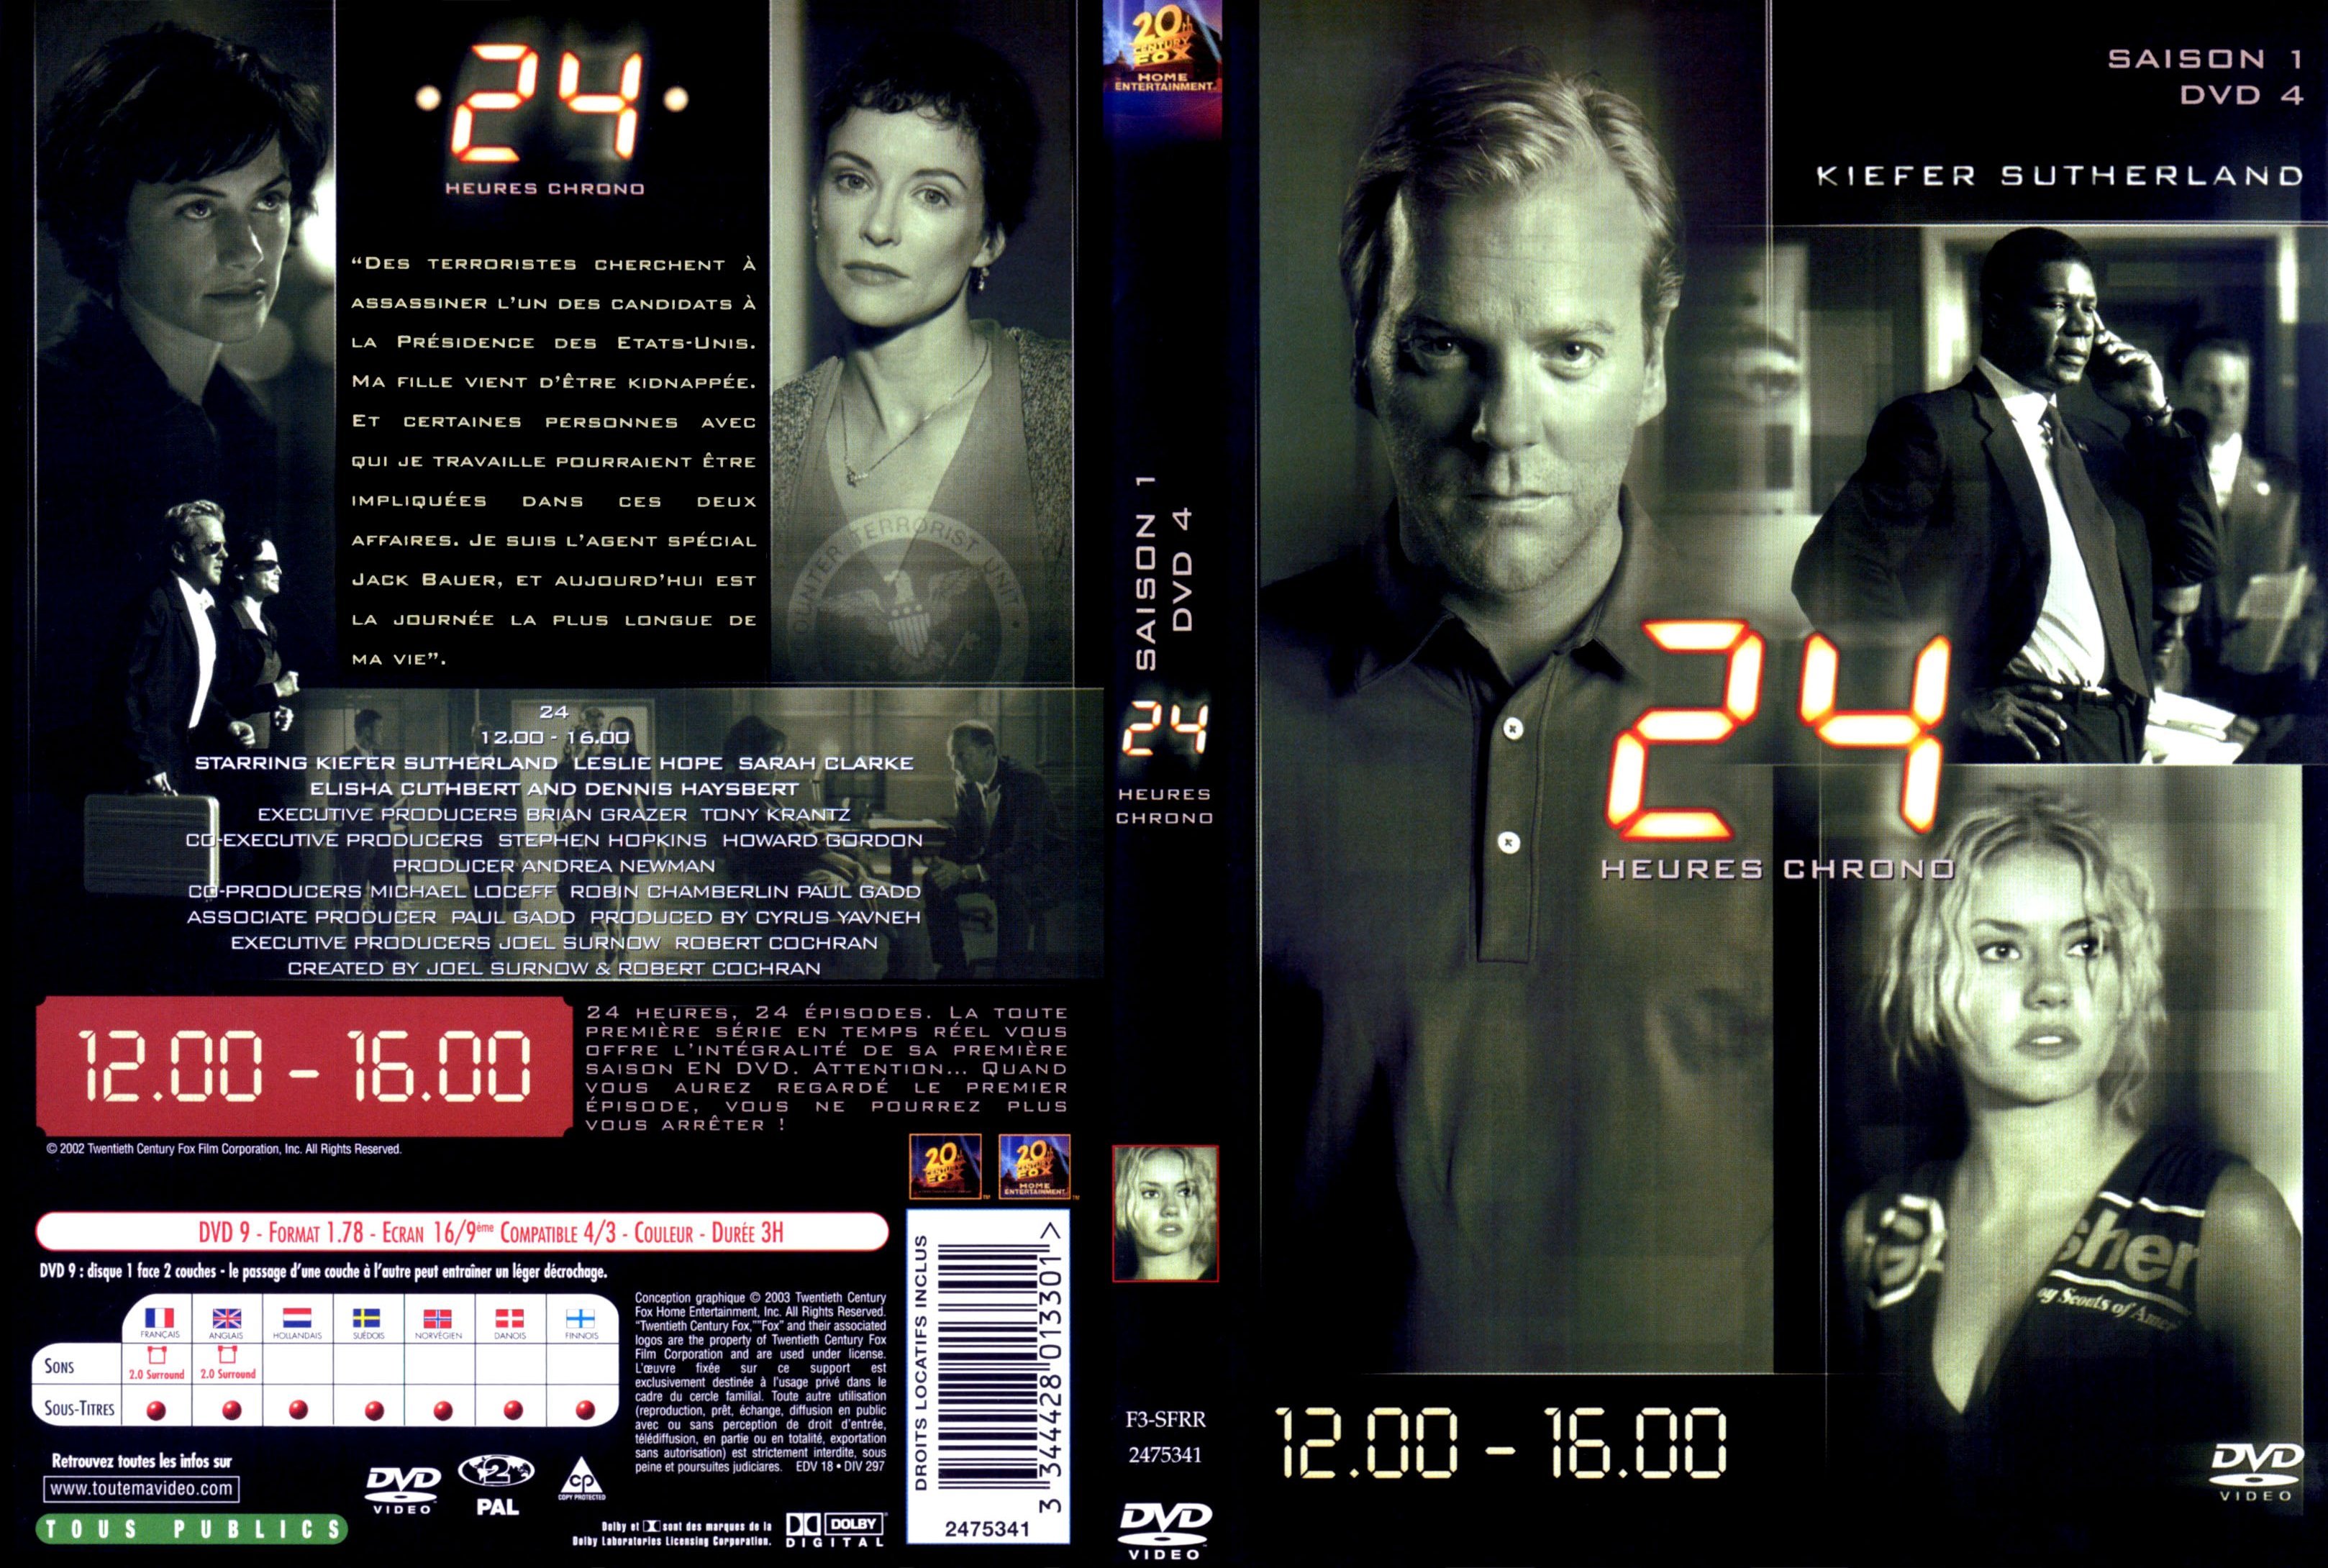 Jaquette DVD 24 heures chrono Saison 1 dvd 4